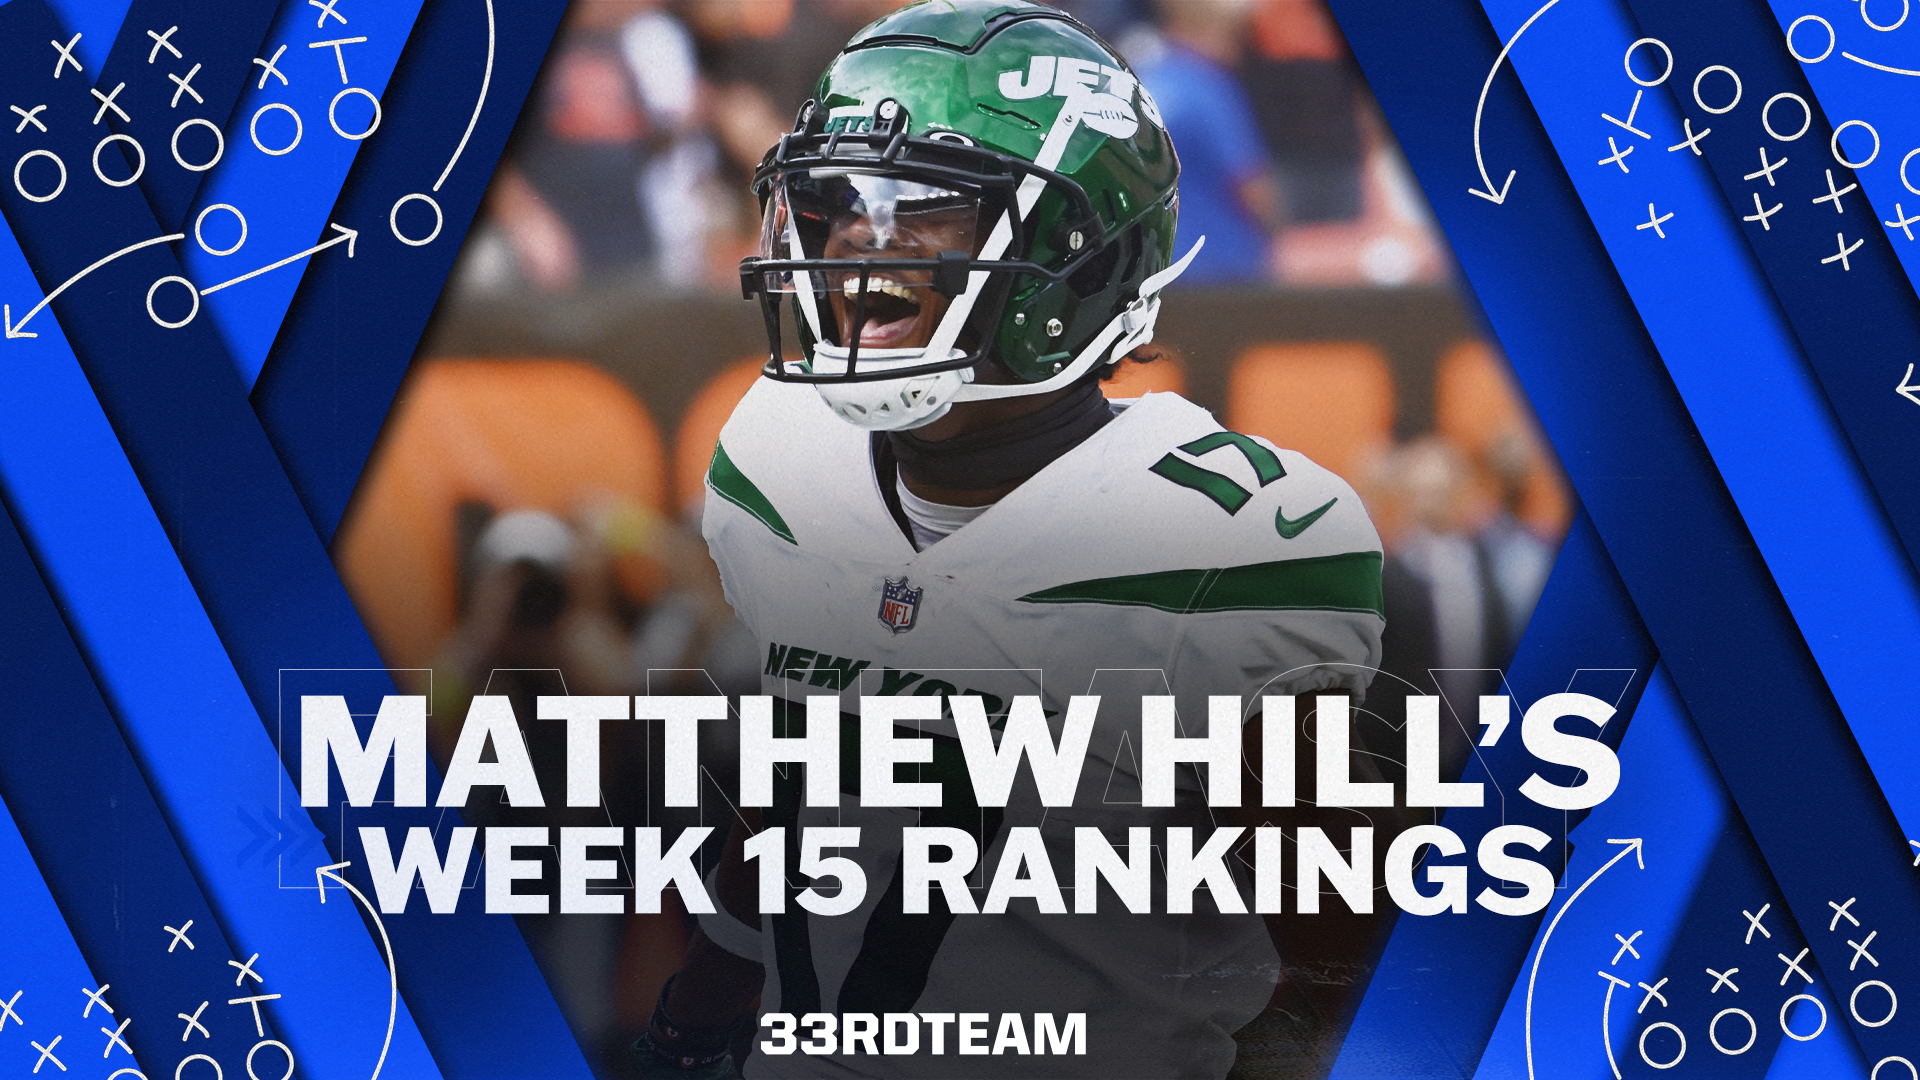 Hill's NFL Week 15 Fantasy Football Rankings